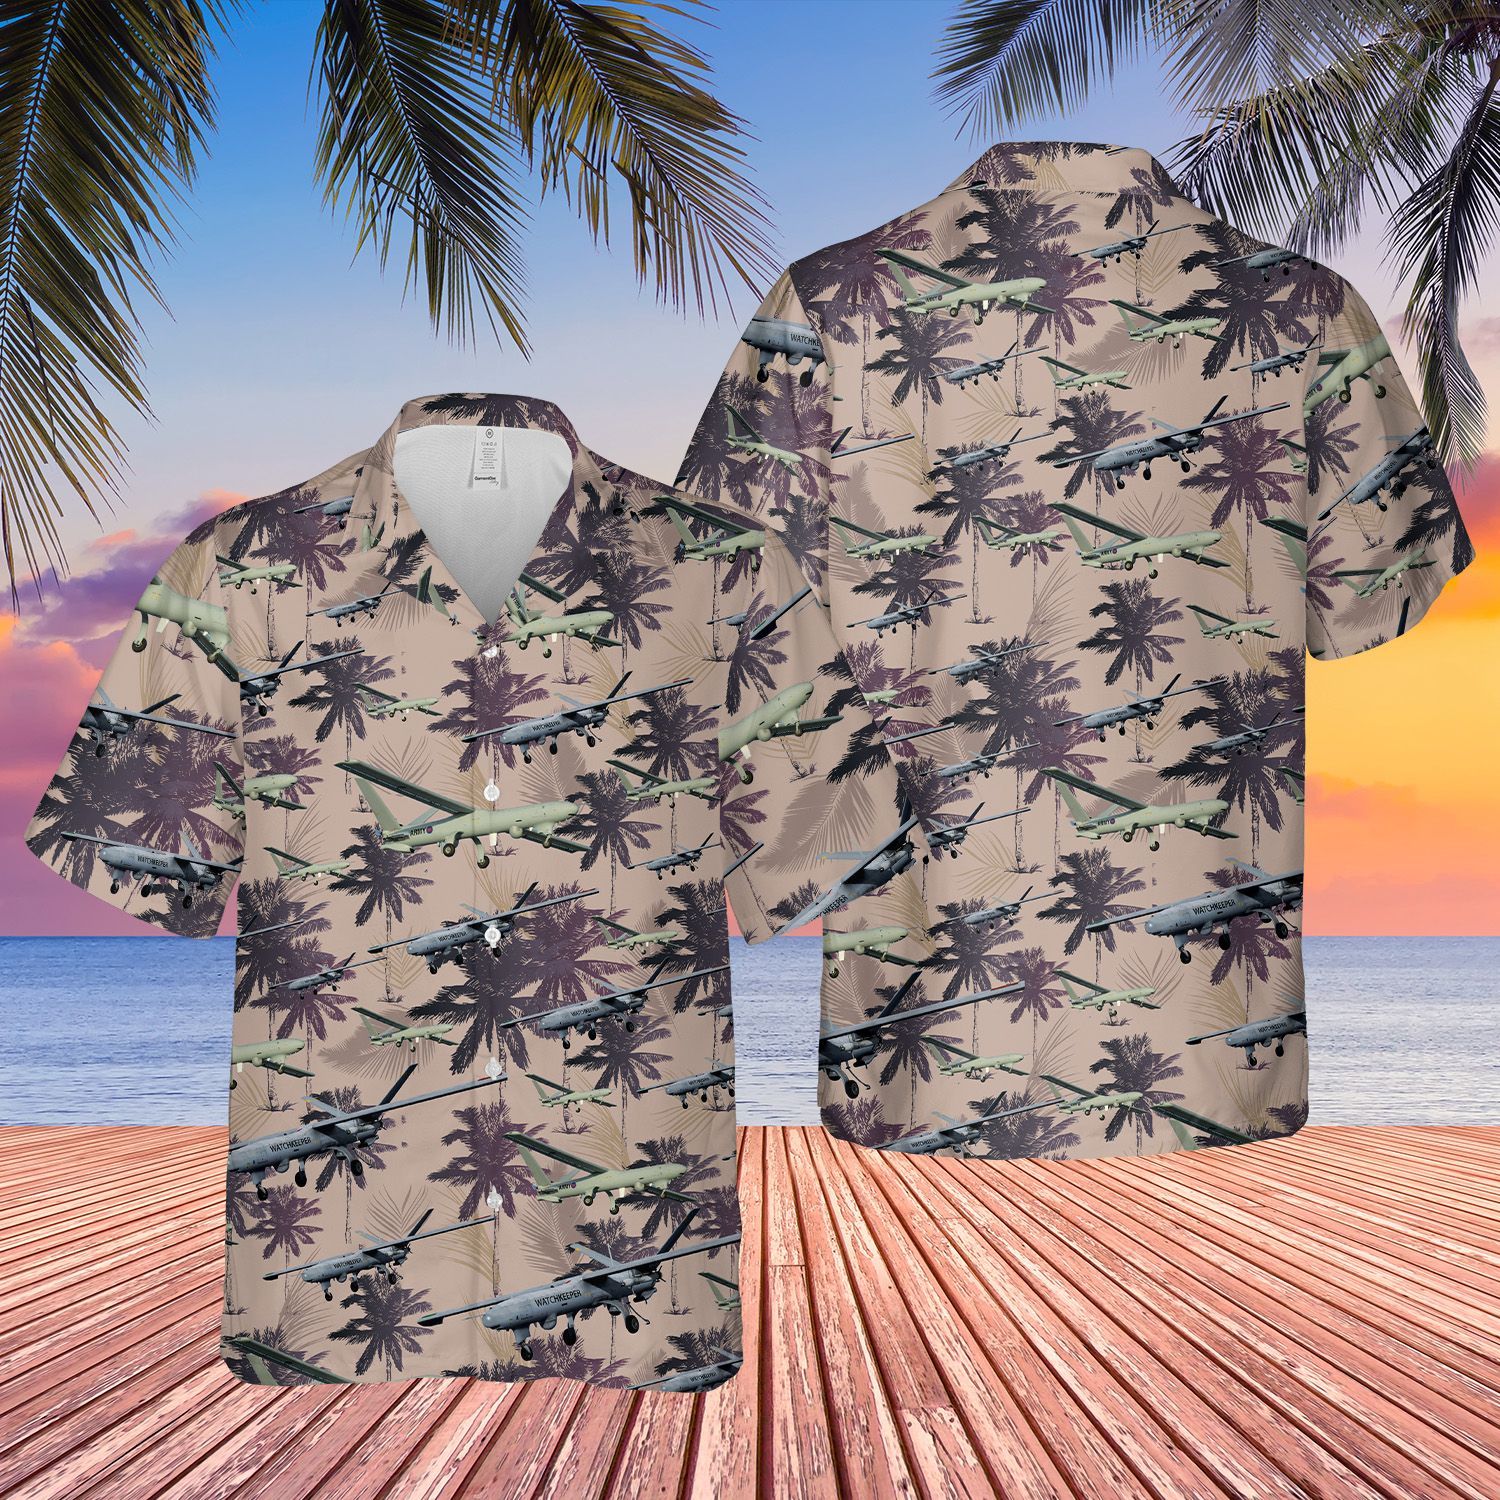 Enjoy your summer with top cool hawaiian shirt below 140